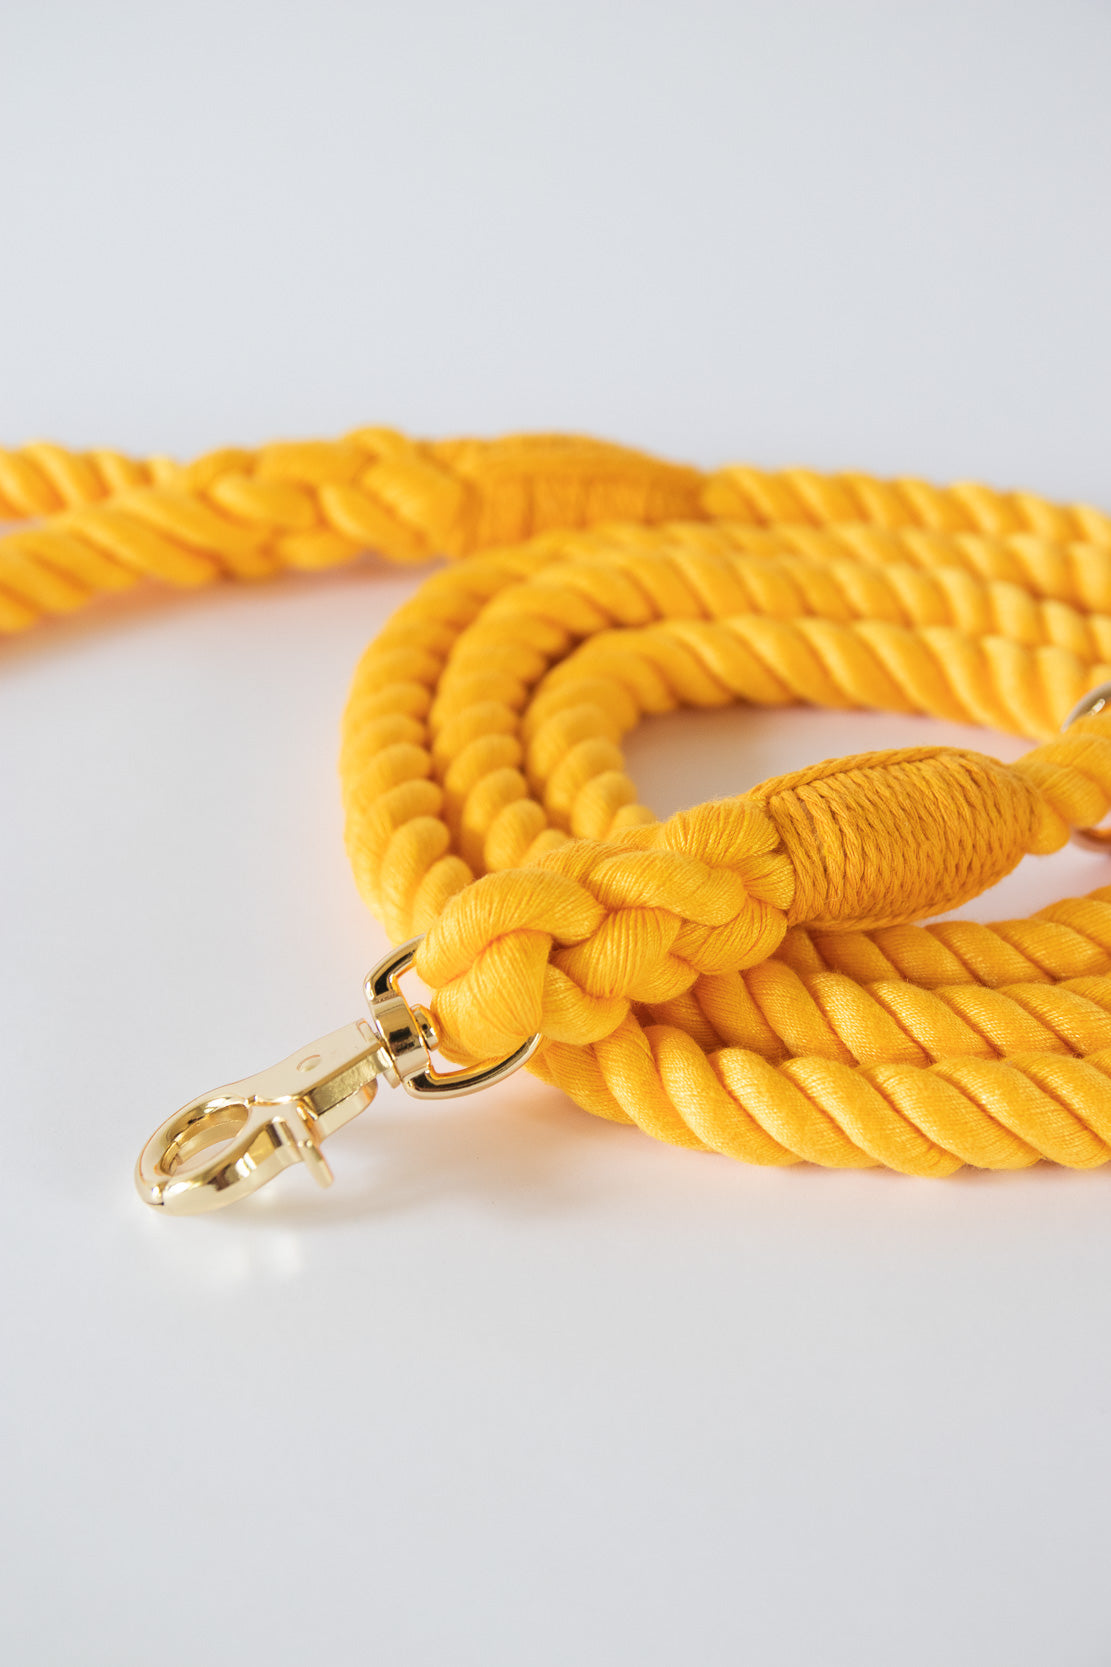 Yellow Rope leash 180 cm long